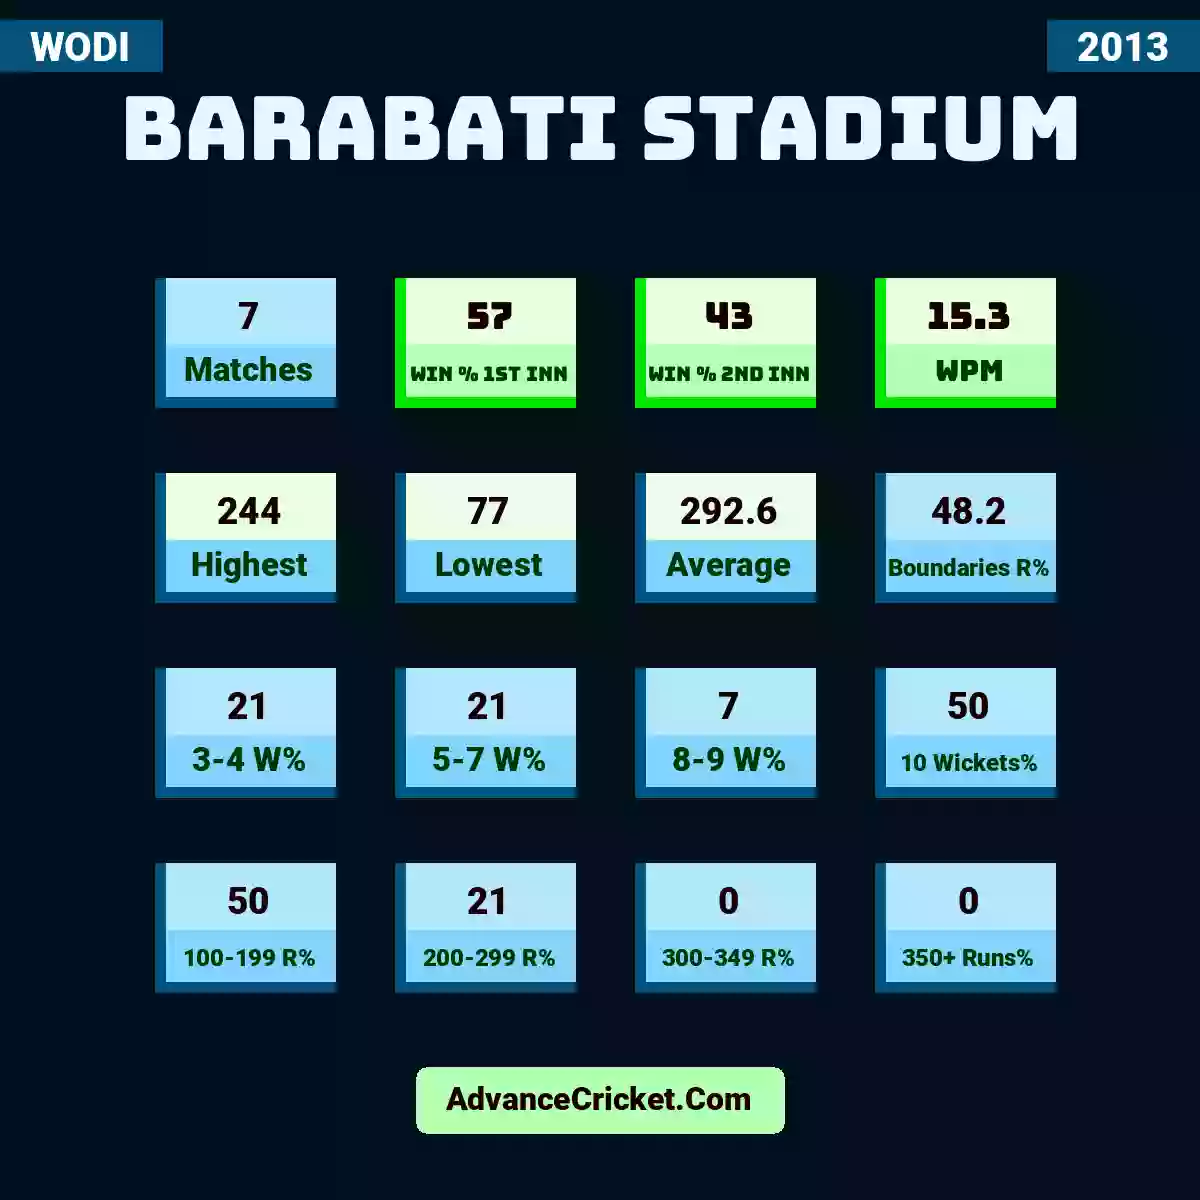 Image showing Barabati Stadium with Matches: 7, Win % 1st Inn: 57, Win % 2nd Inn: 43, WPM: 15.3, Highest: 244, Lowest: 77, Average: 292.6, Boundaries R%: 48.2, 3-4 W%: 21, 5-7 W%: 21, 8-9 W%: 7, 10 Wickets%: 50, 100-199 R%: 50, 200-299 R%: 21, 300-349 R%: 0, 350+ Runs%: 0.